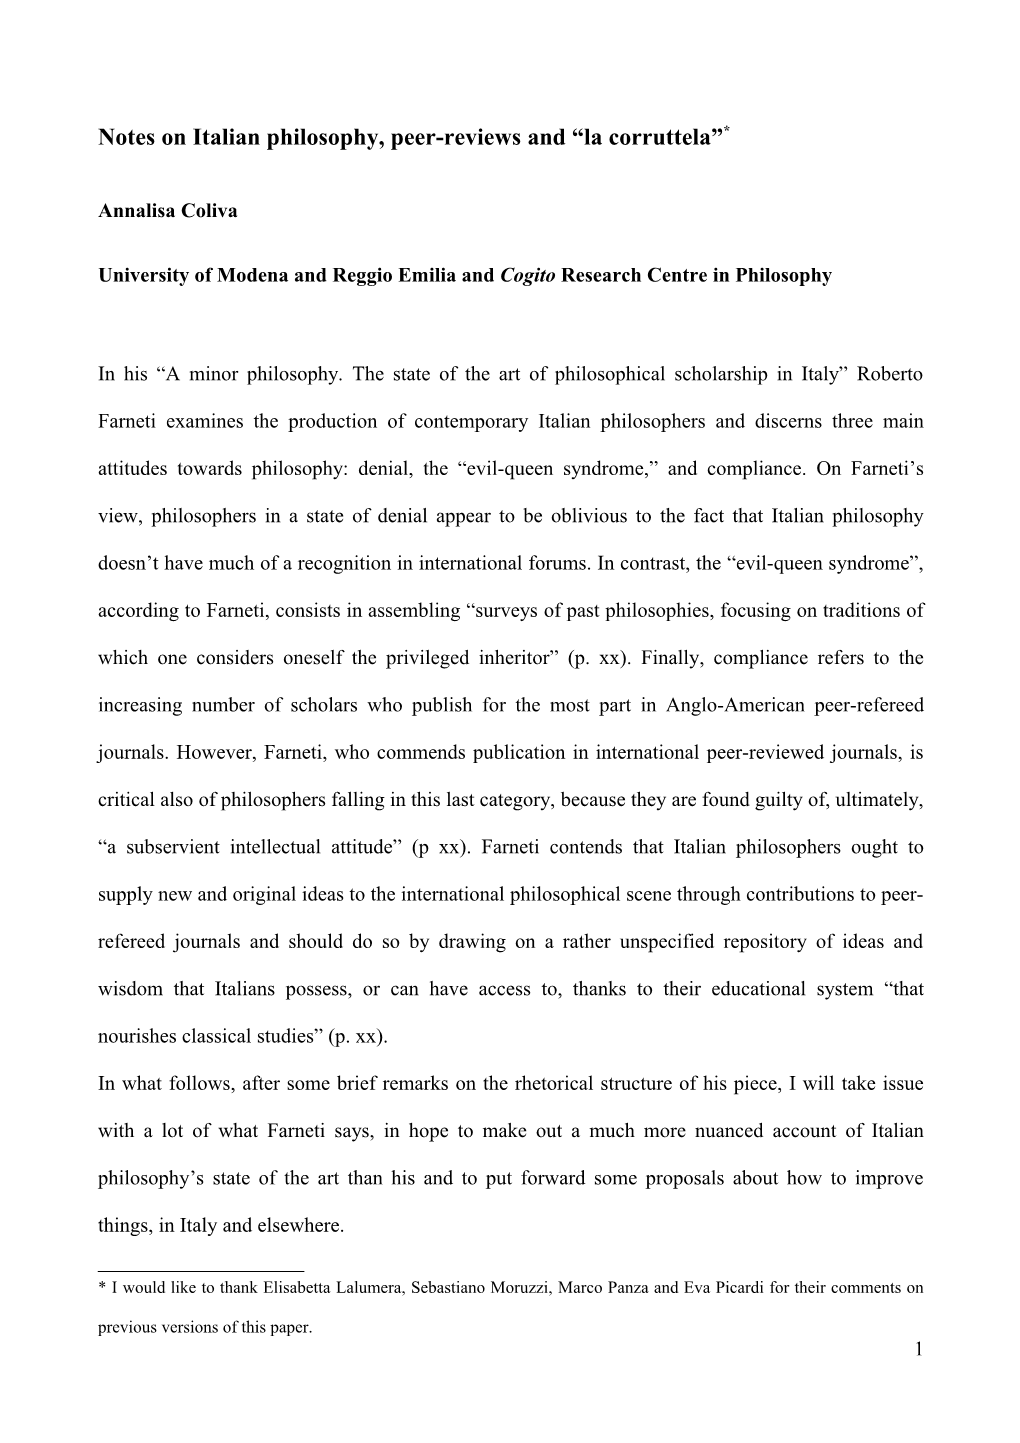 Notes on Italian Philosophy, Peer-Reviews and “La Corruttela”*